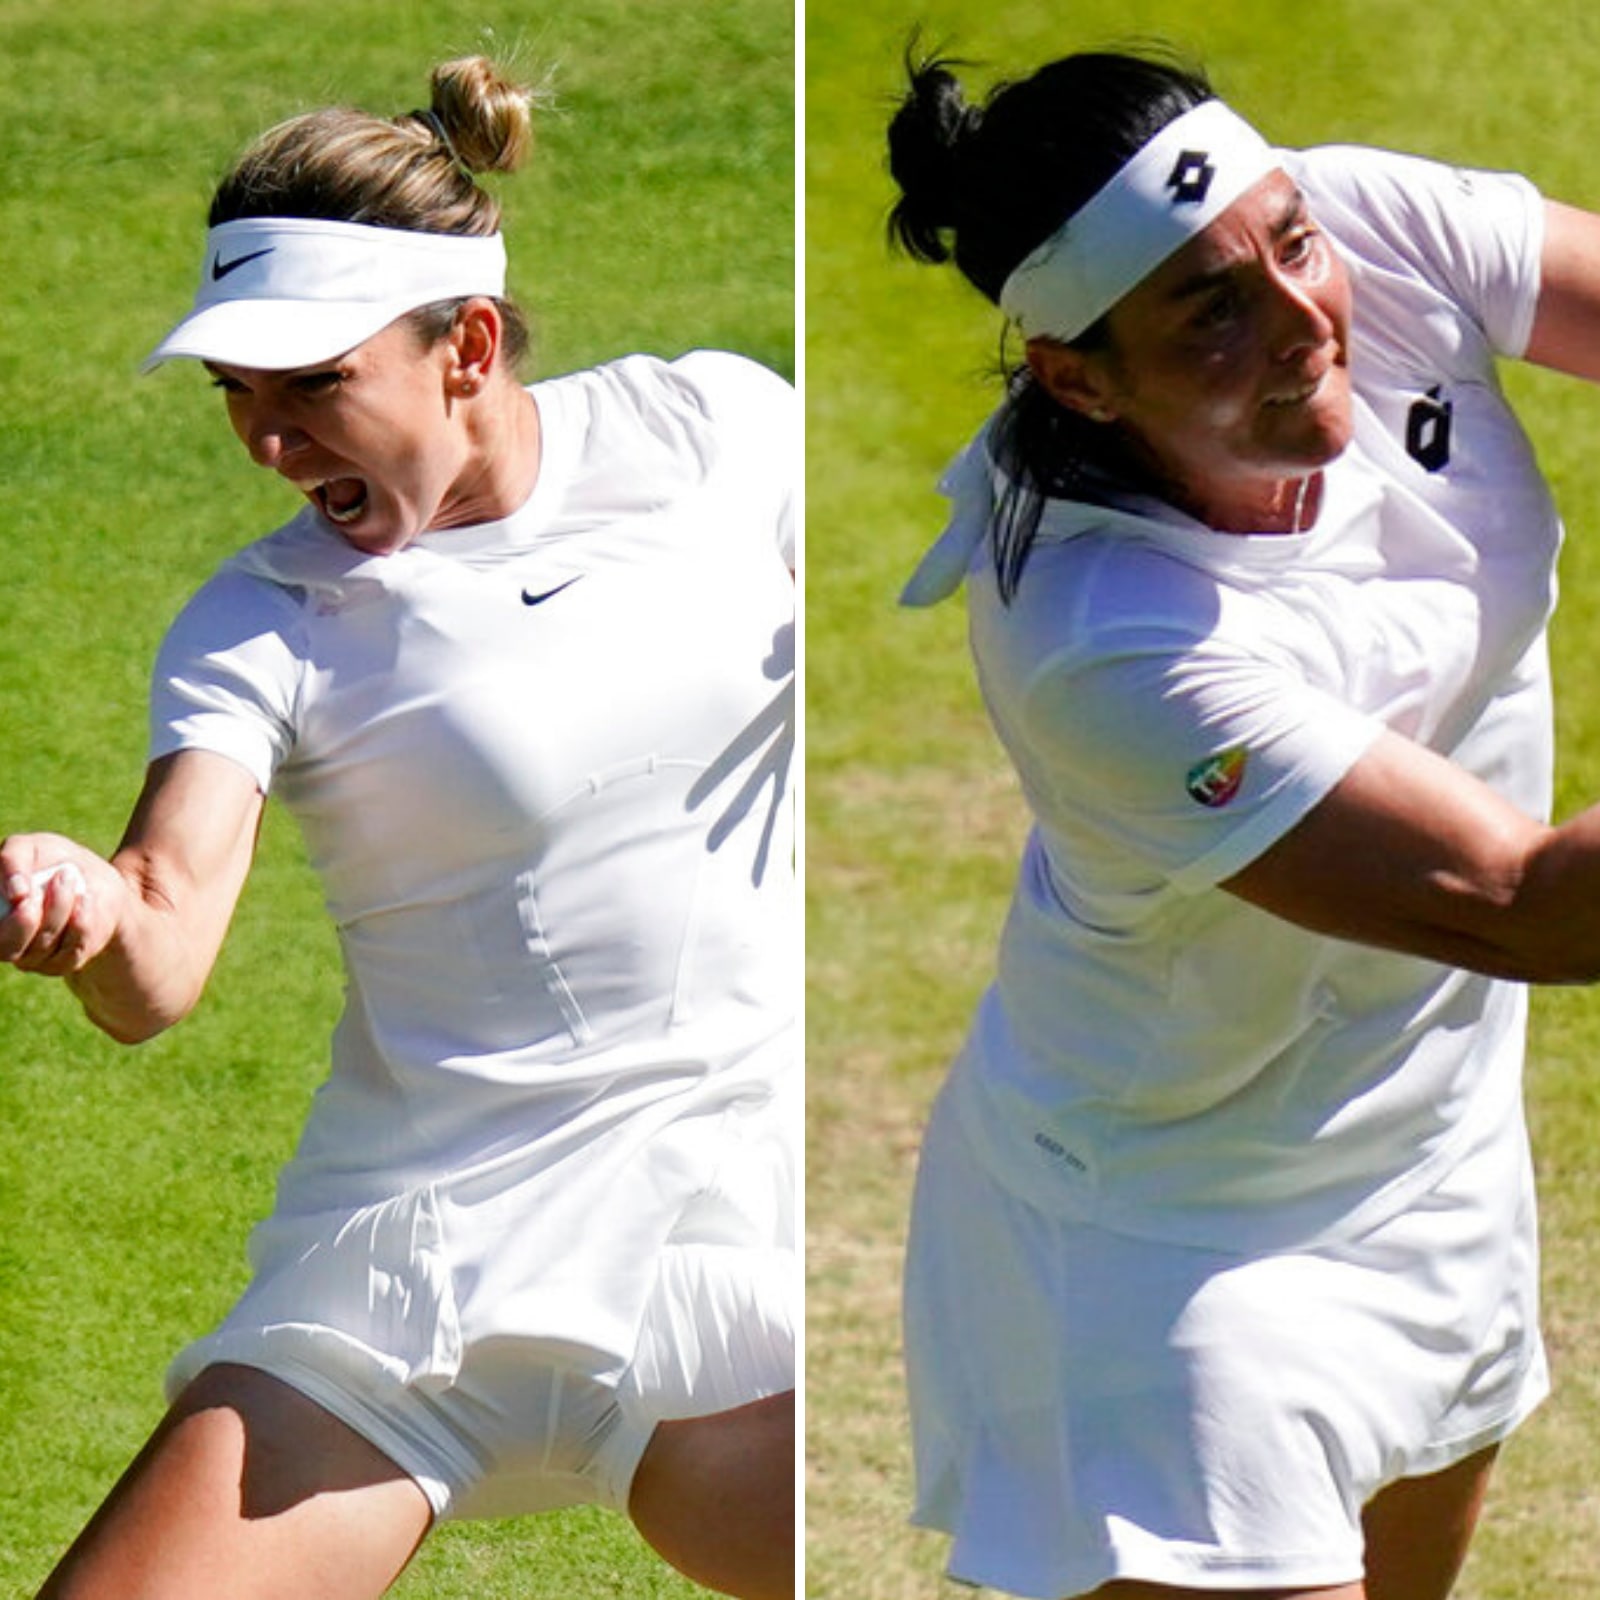 Elena Rybakina vs Ons Jabeur, Wimbledon 2022 Final Highlights Rybakina Beats Jabeur 3-6, 6-2, 6-2